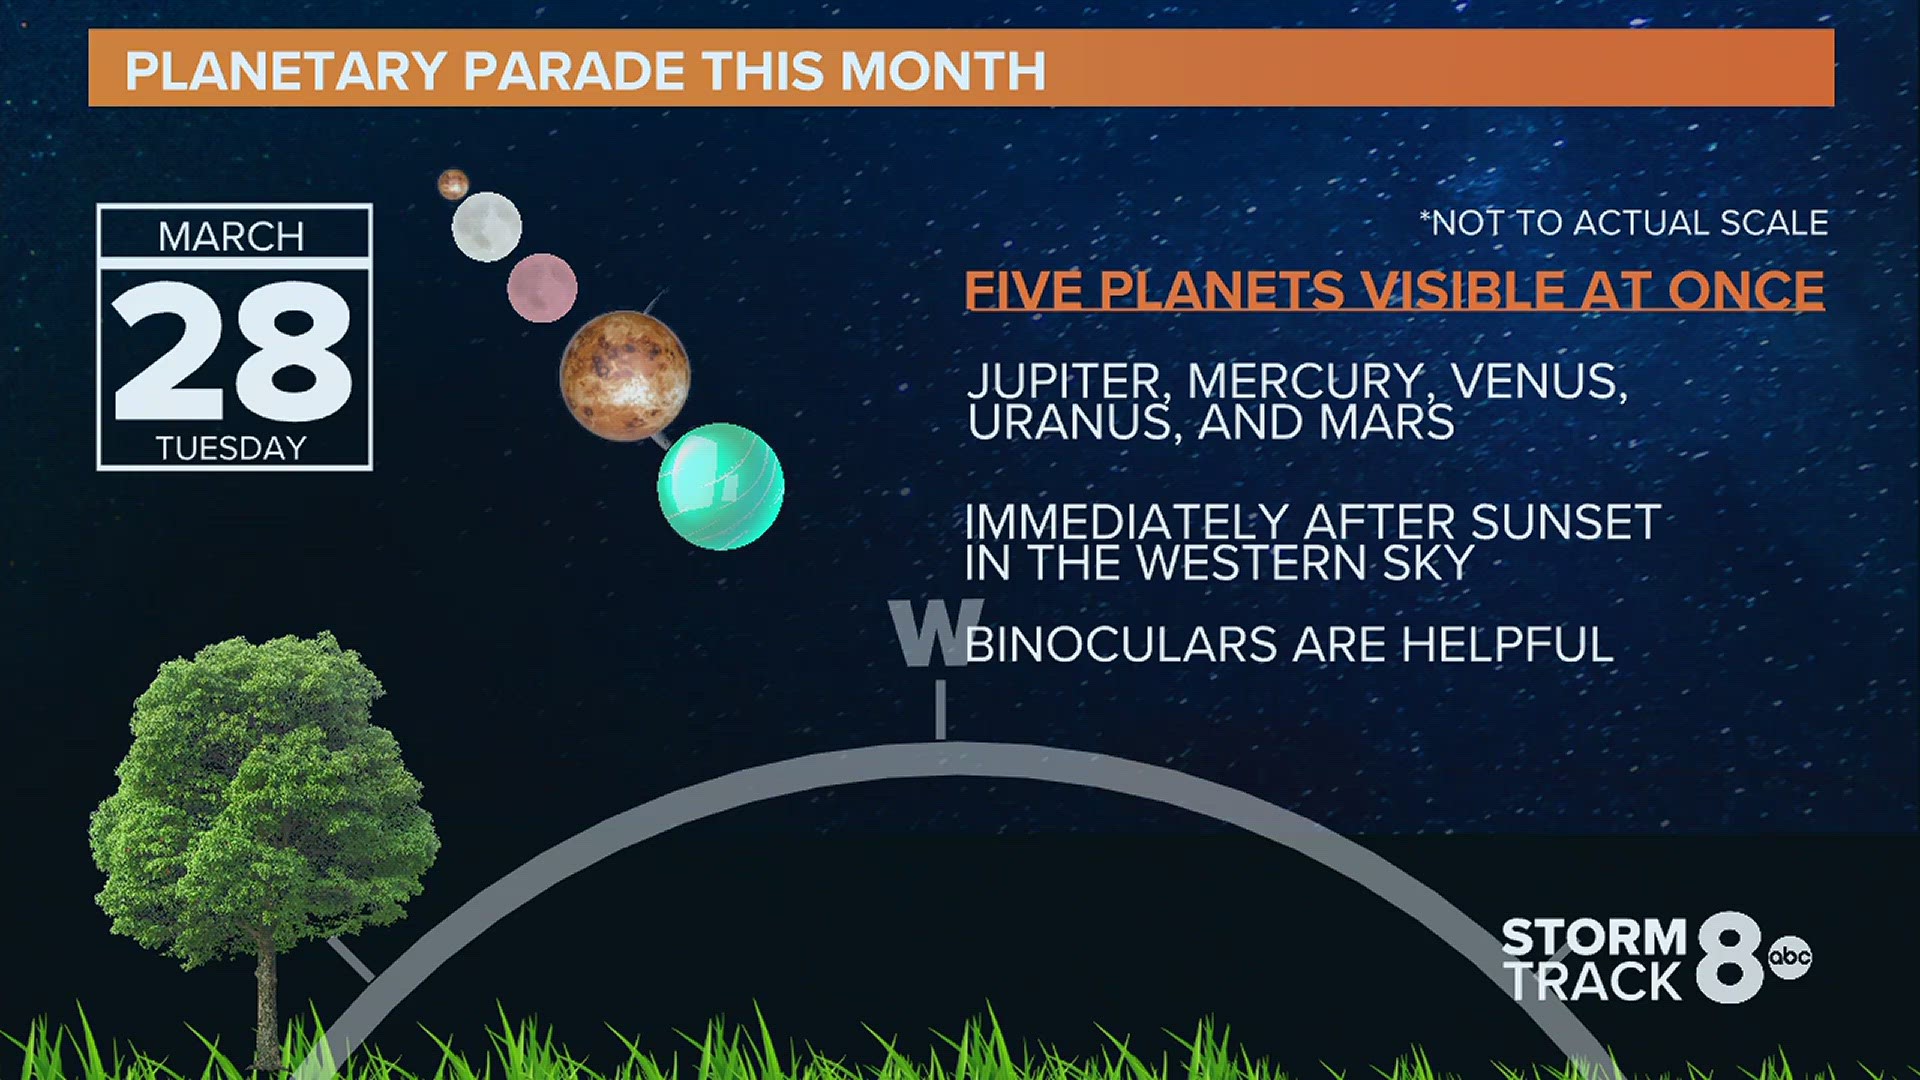 The parade of planets will include Mercury, Jupiter, Venus, Uranus and Mars